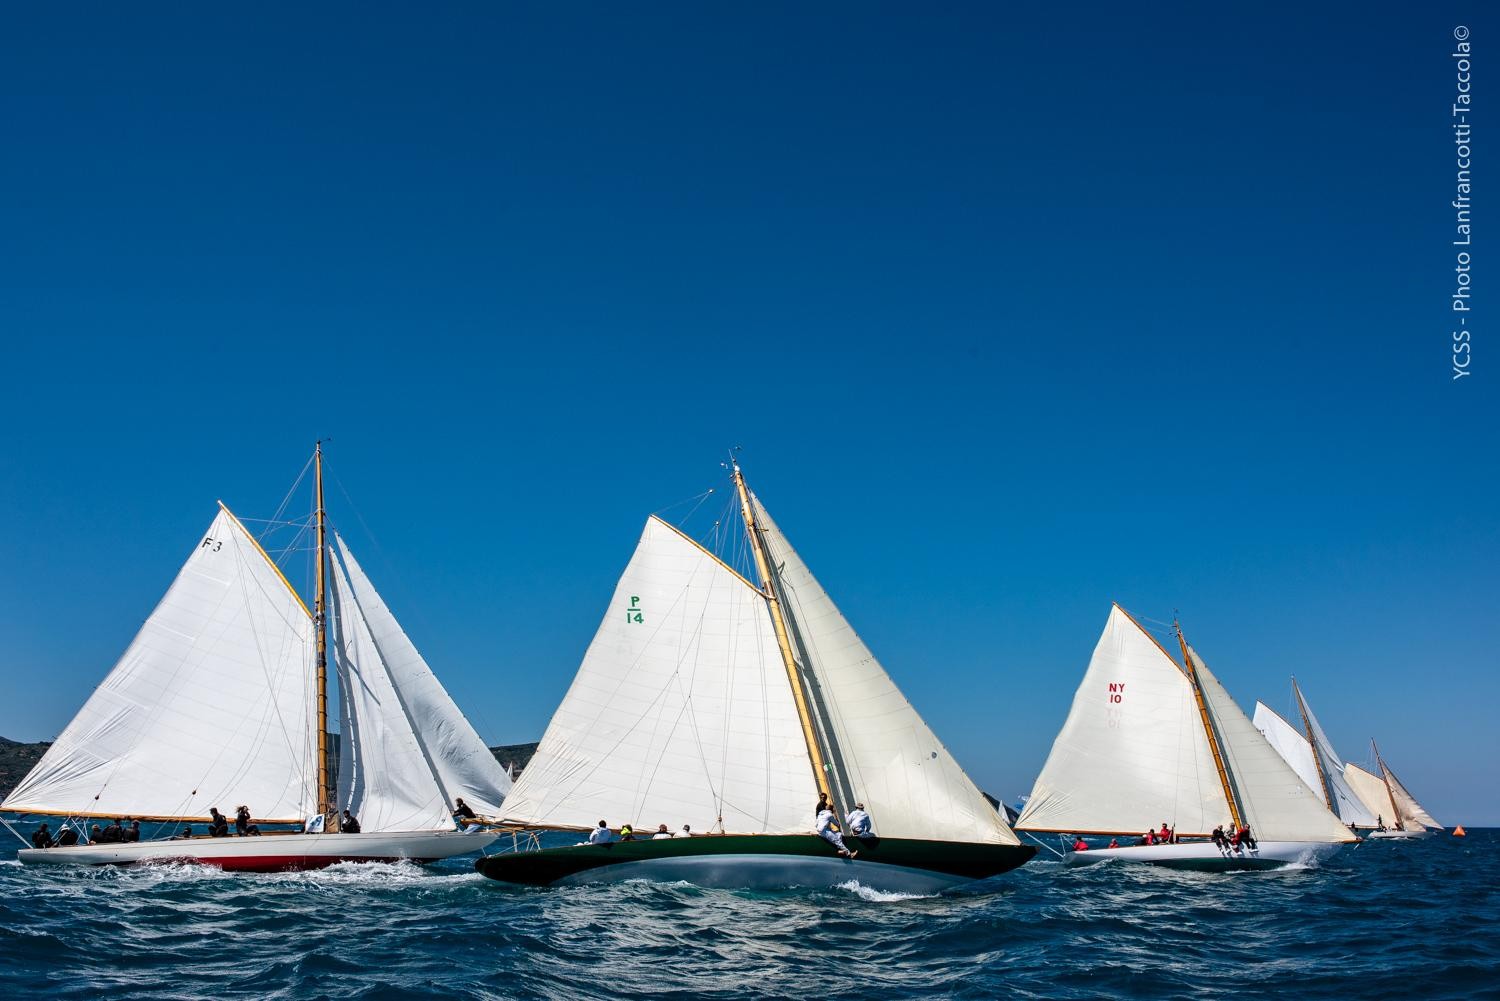 Argentario Sailing Week 2018 - Panerai Classic Yacht Challenge -DAY 2